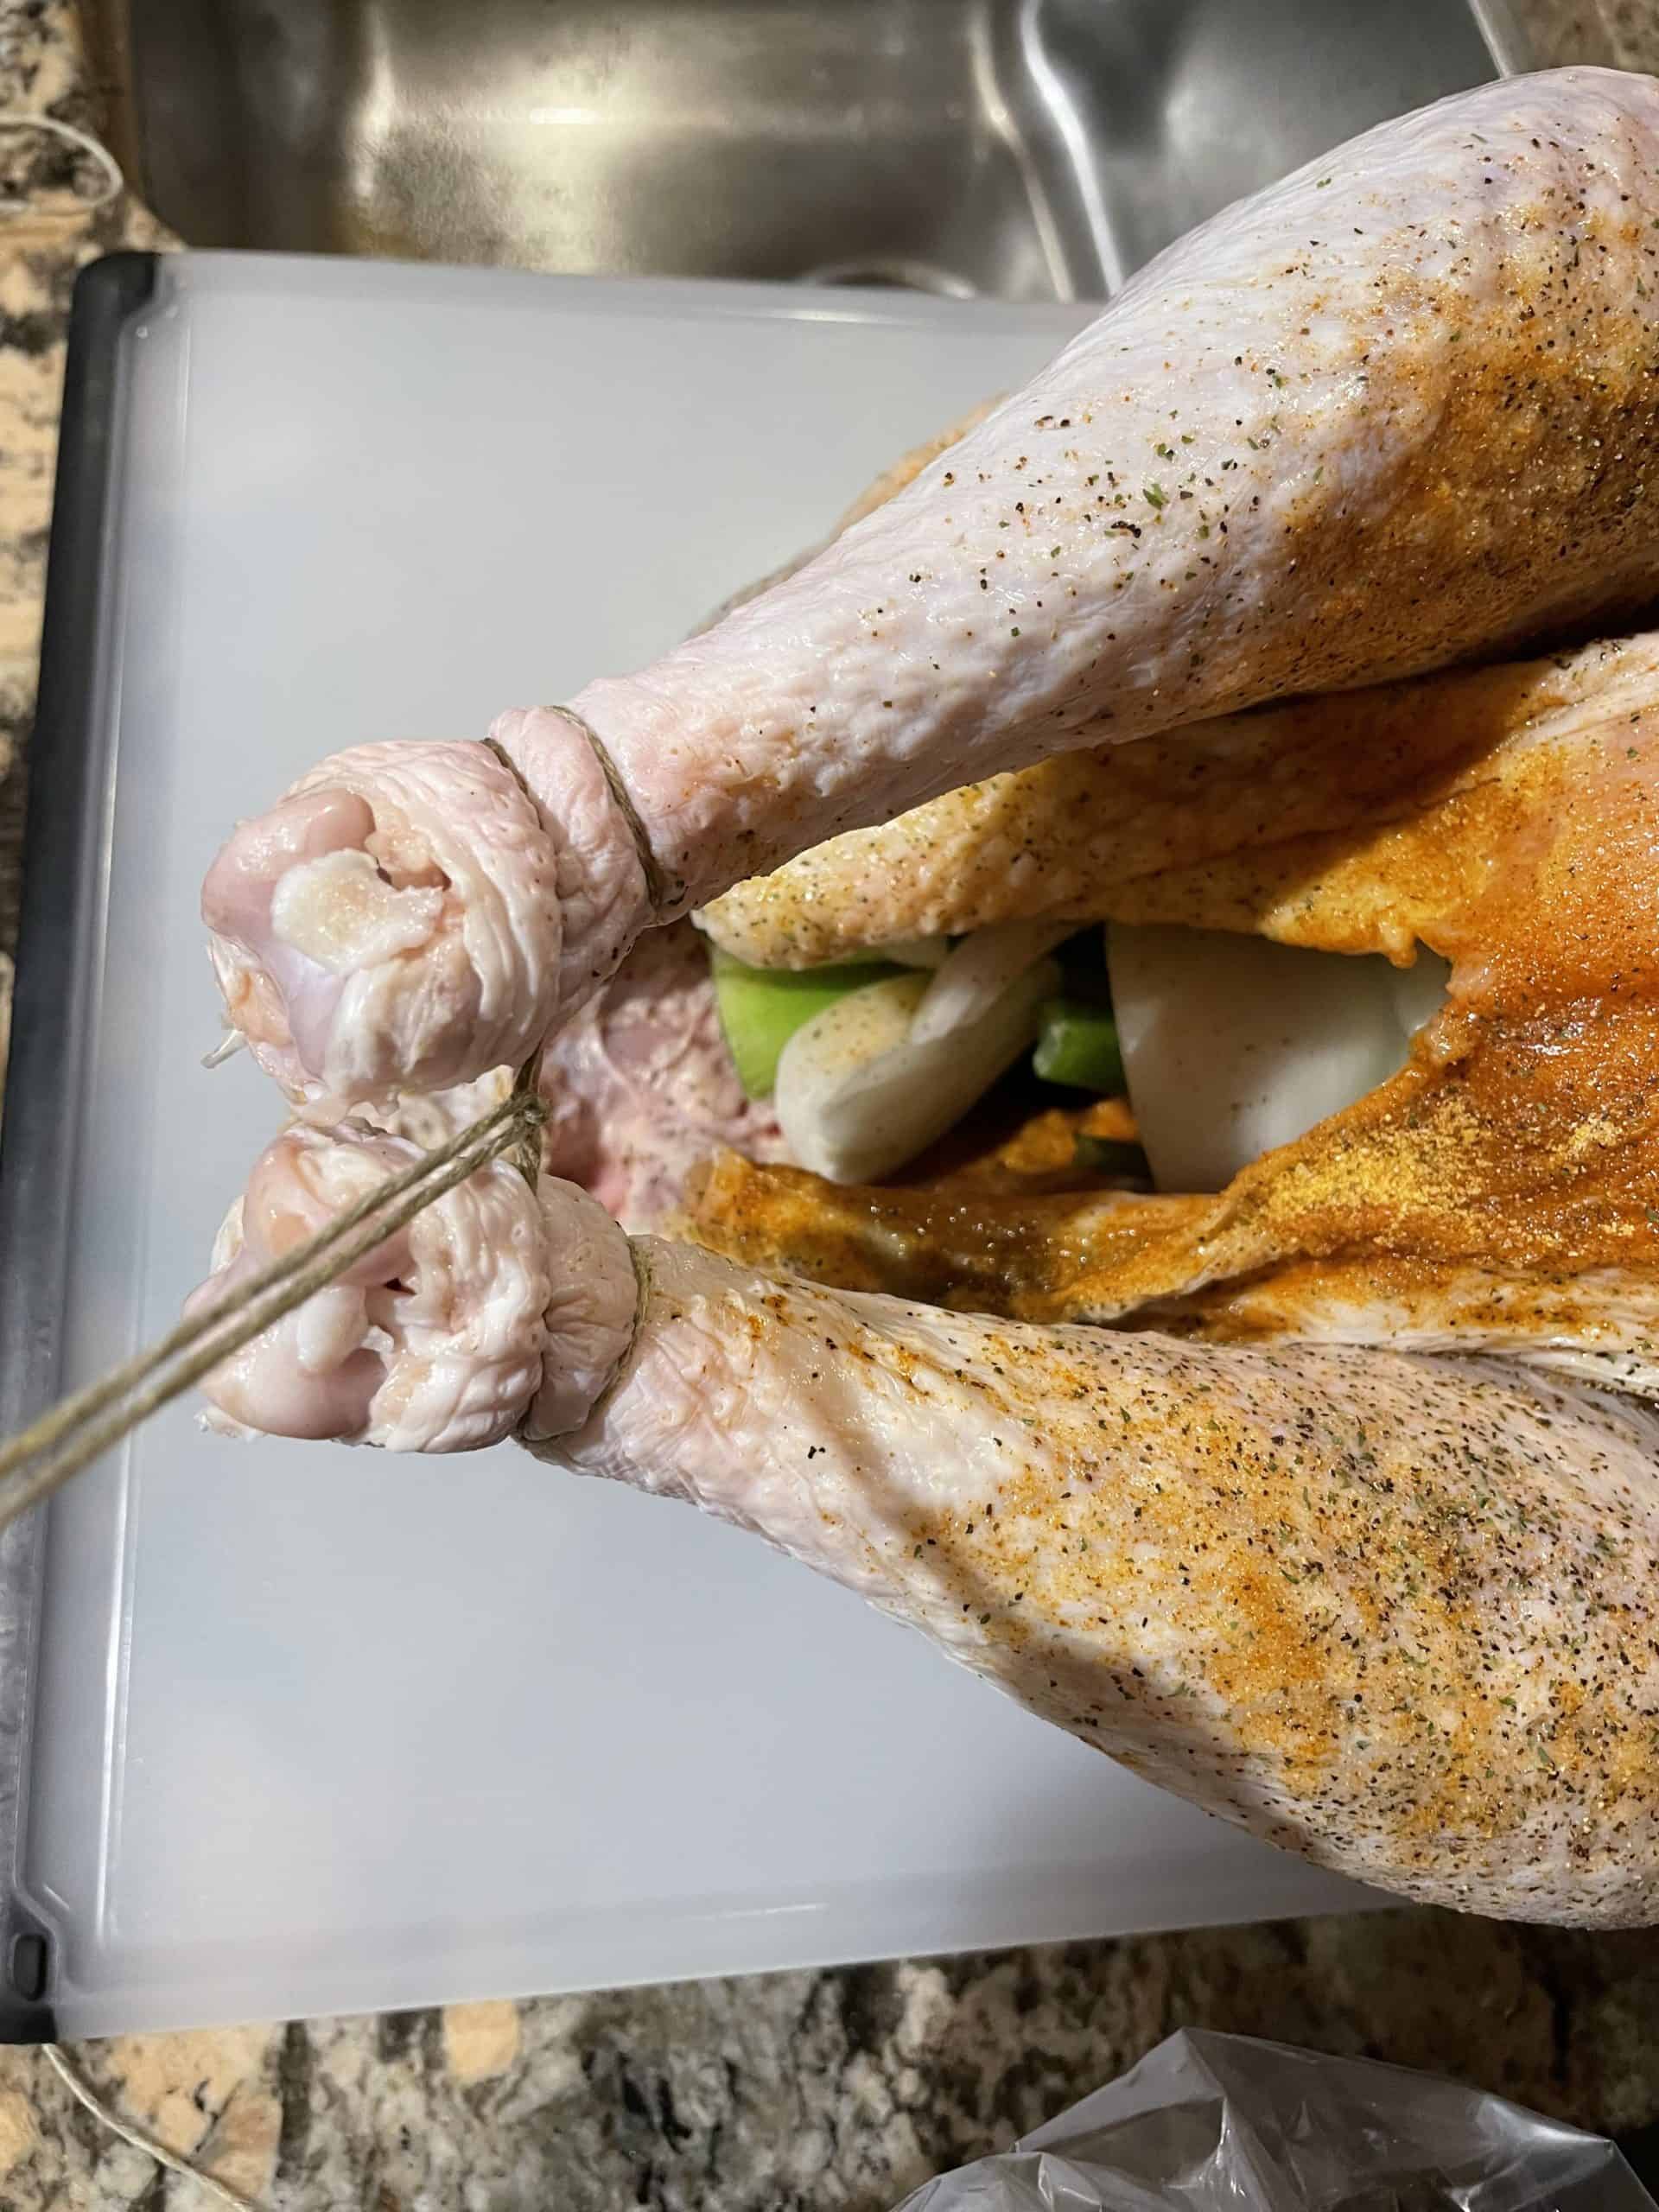 Tye the turkey legs together before roasting.